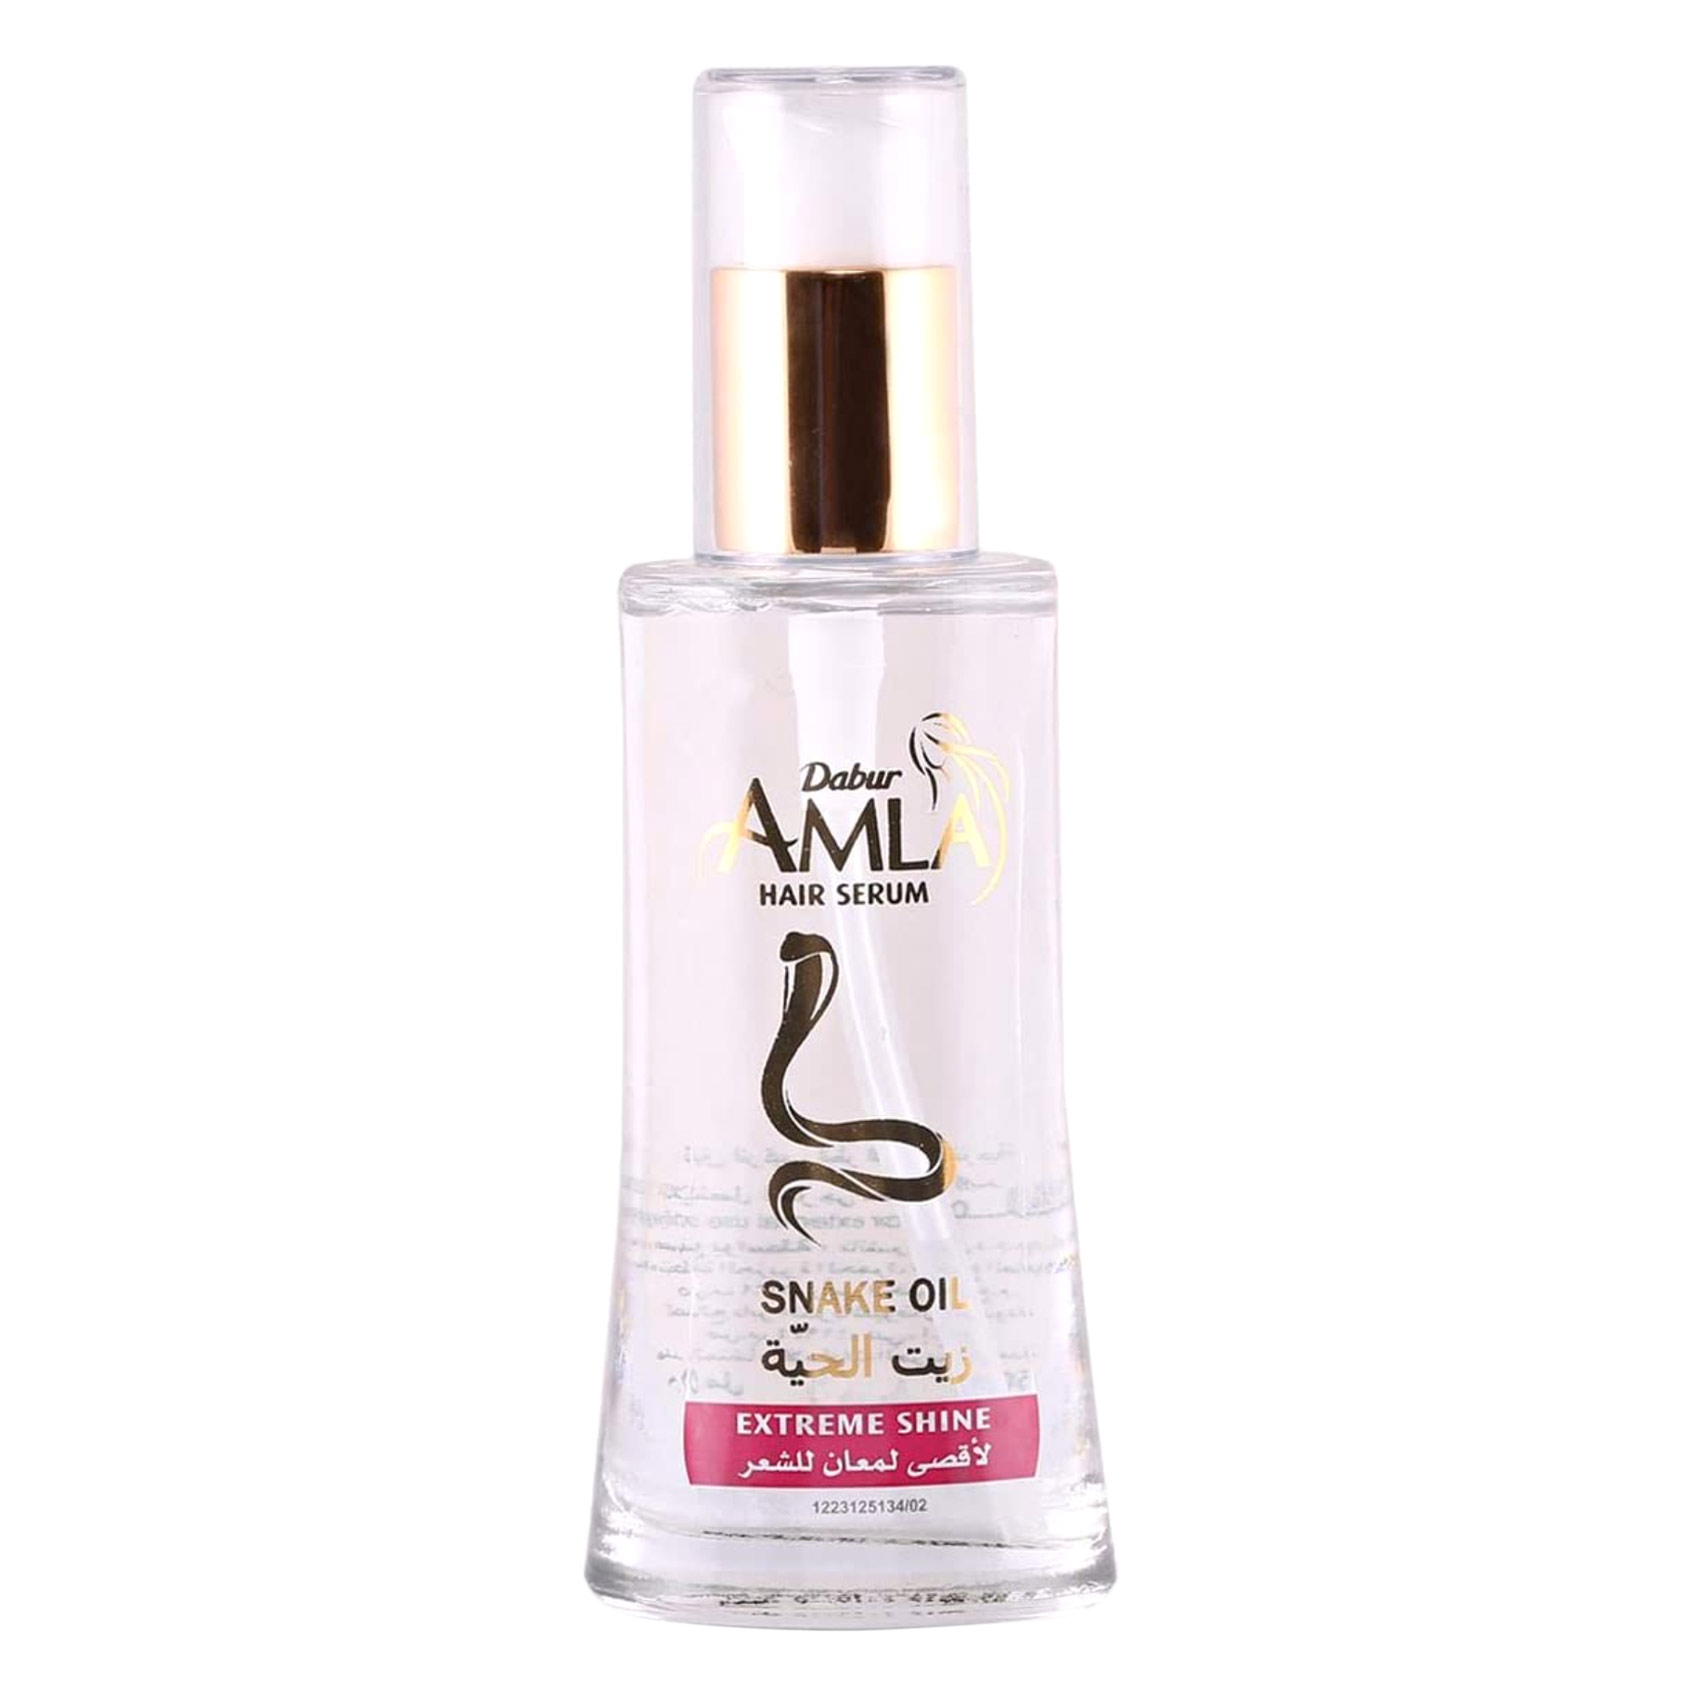 Dabur AMLa Extreme Shine Snake Oil Serum 50ML